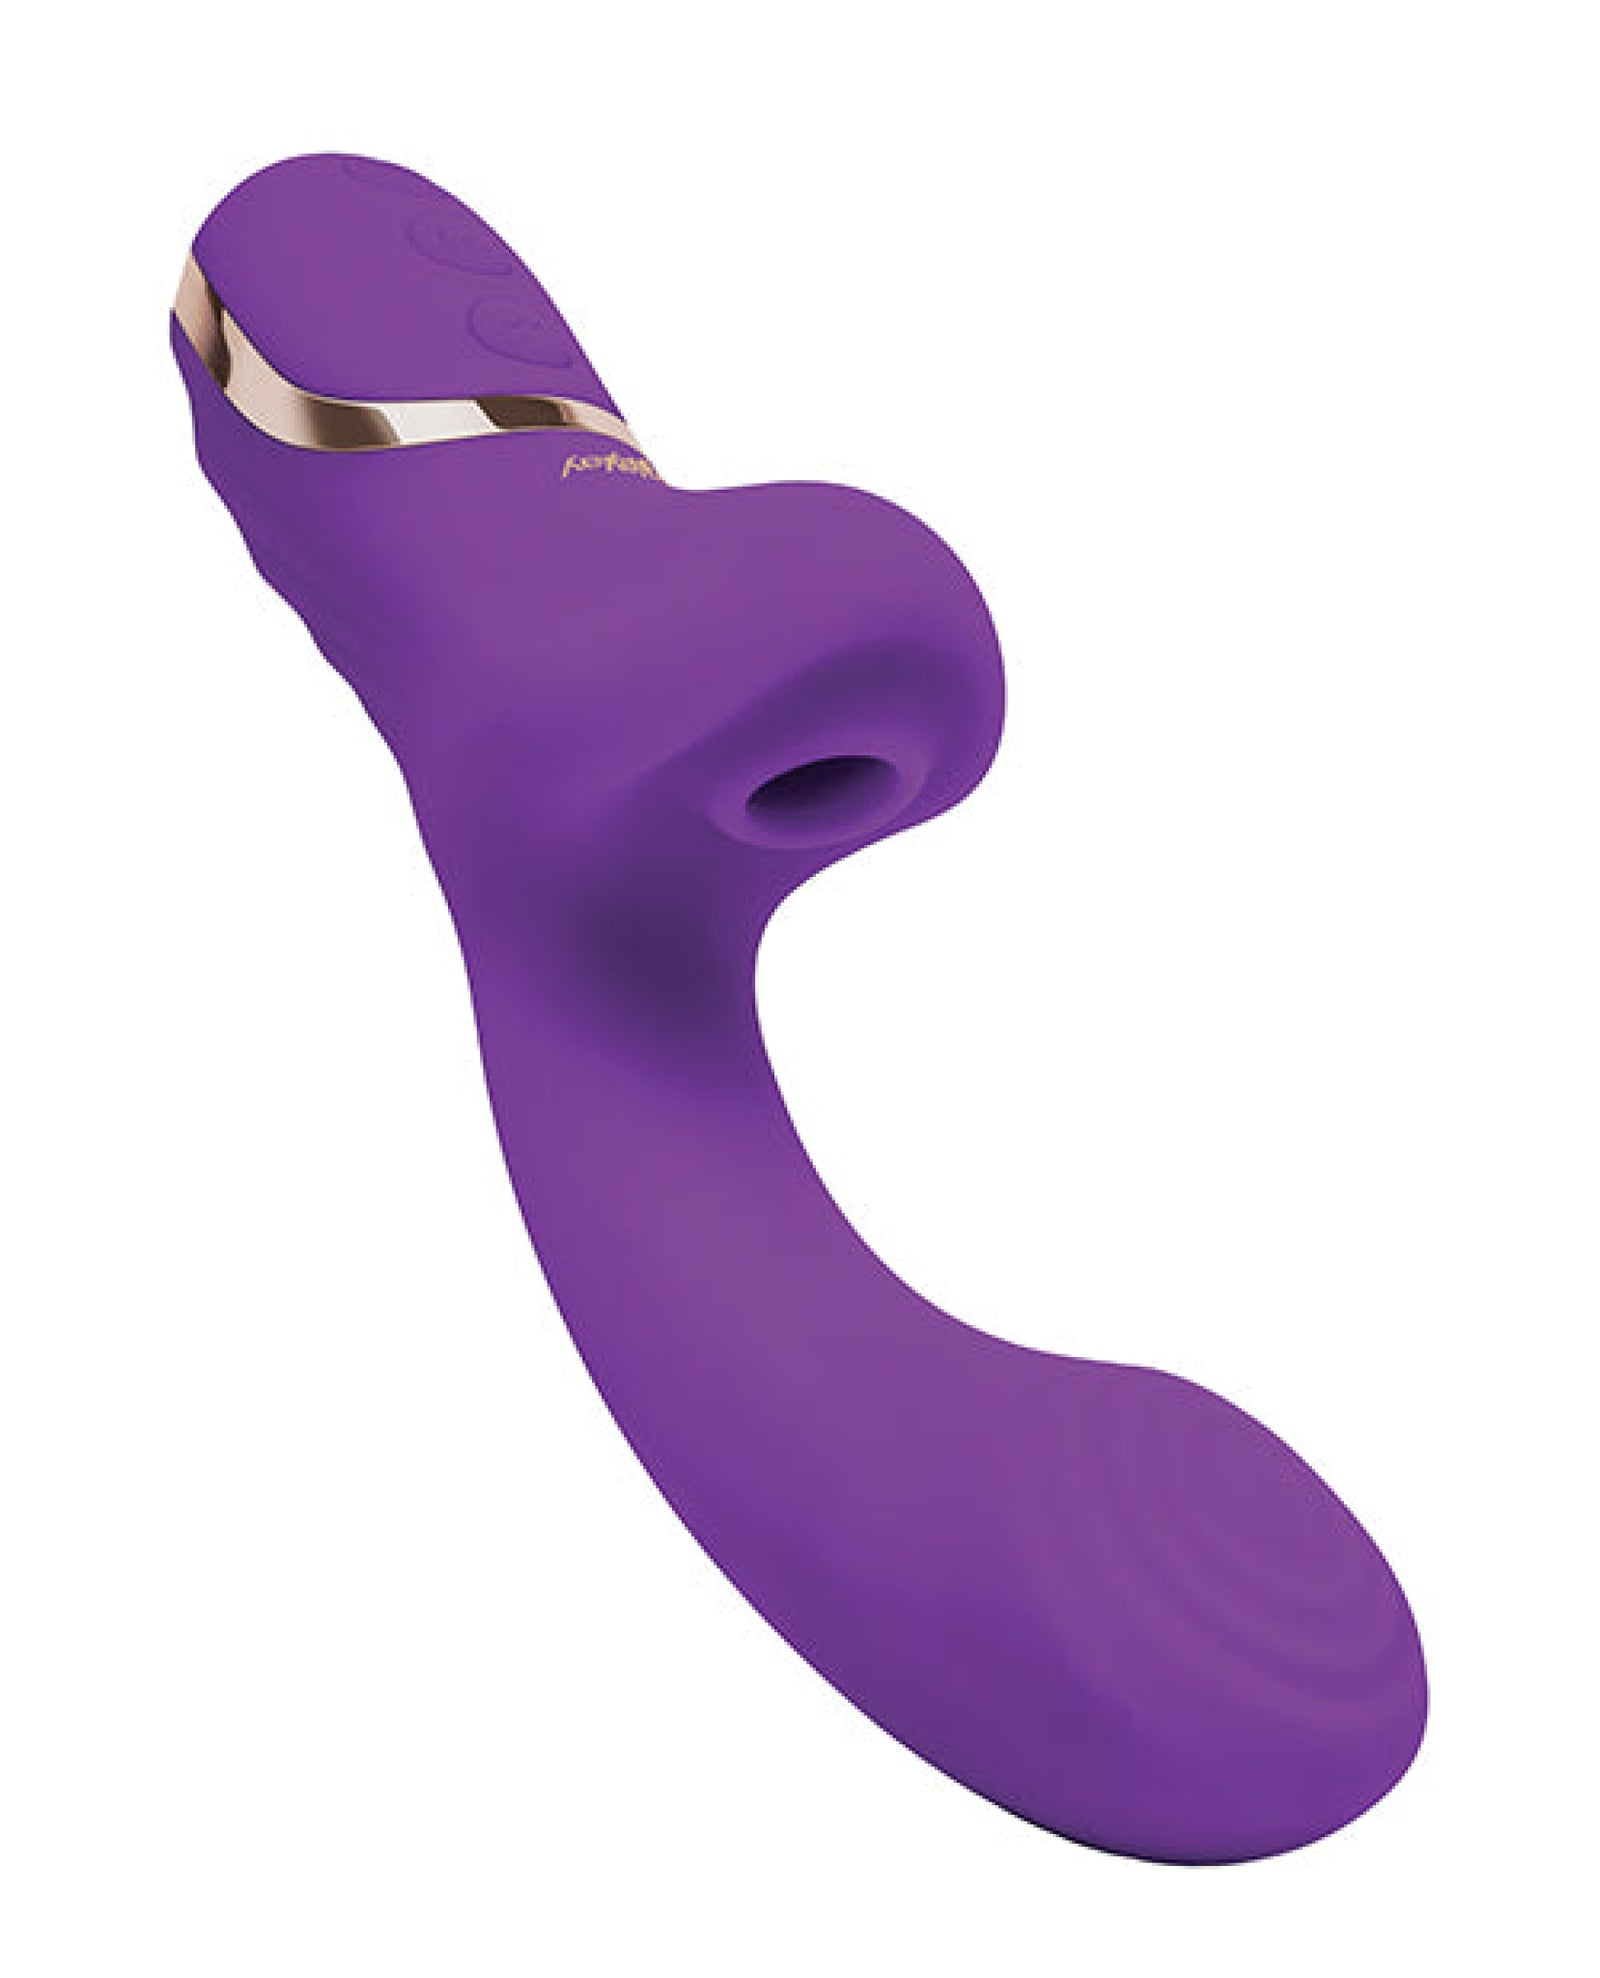 Xgen Bodywand G-play Dual Stimulation Squirt Trainer - Purple Xgen